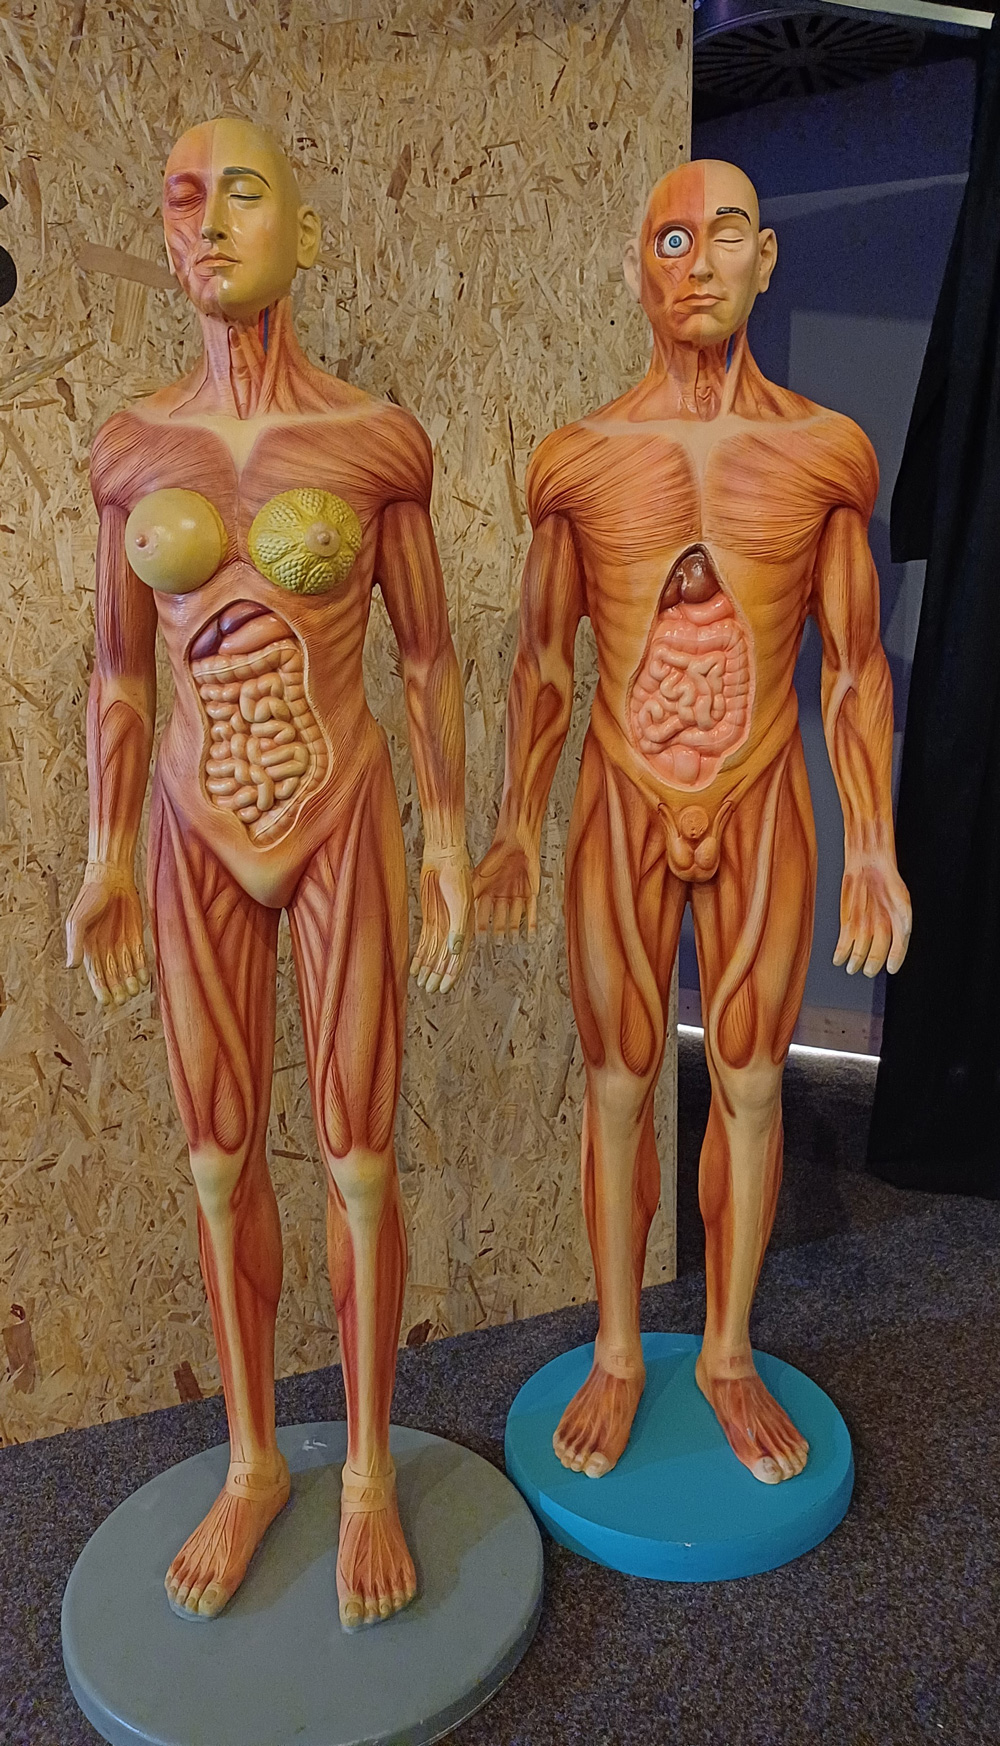 Exp corpo humano.jpg 2